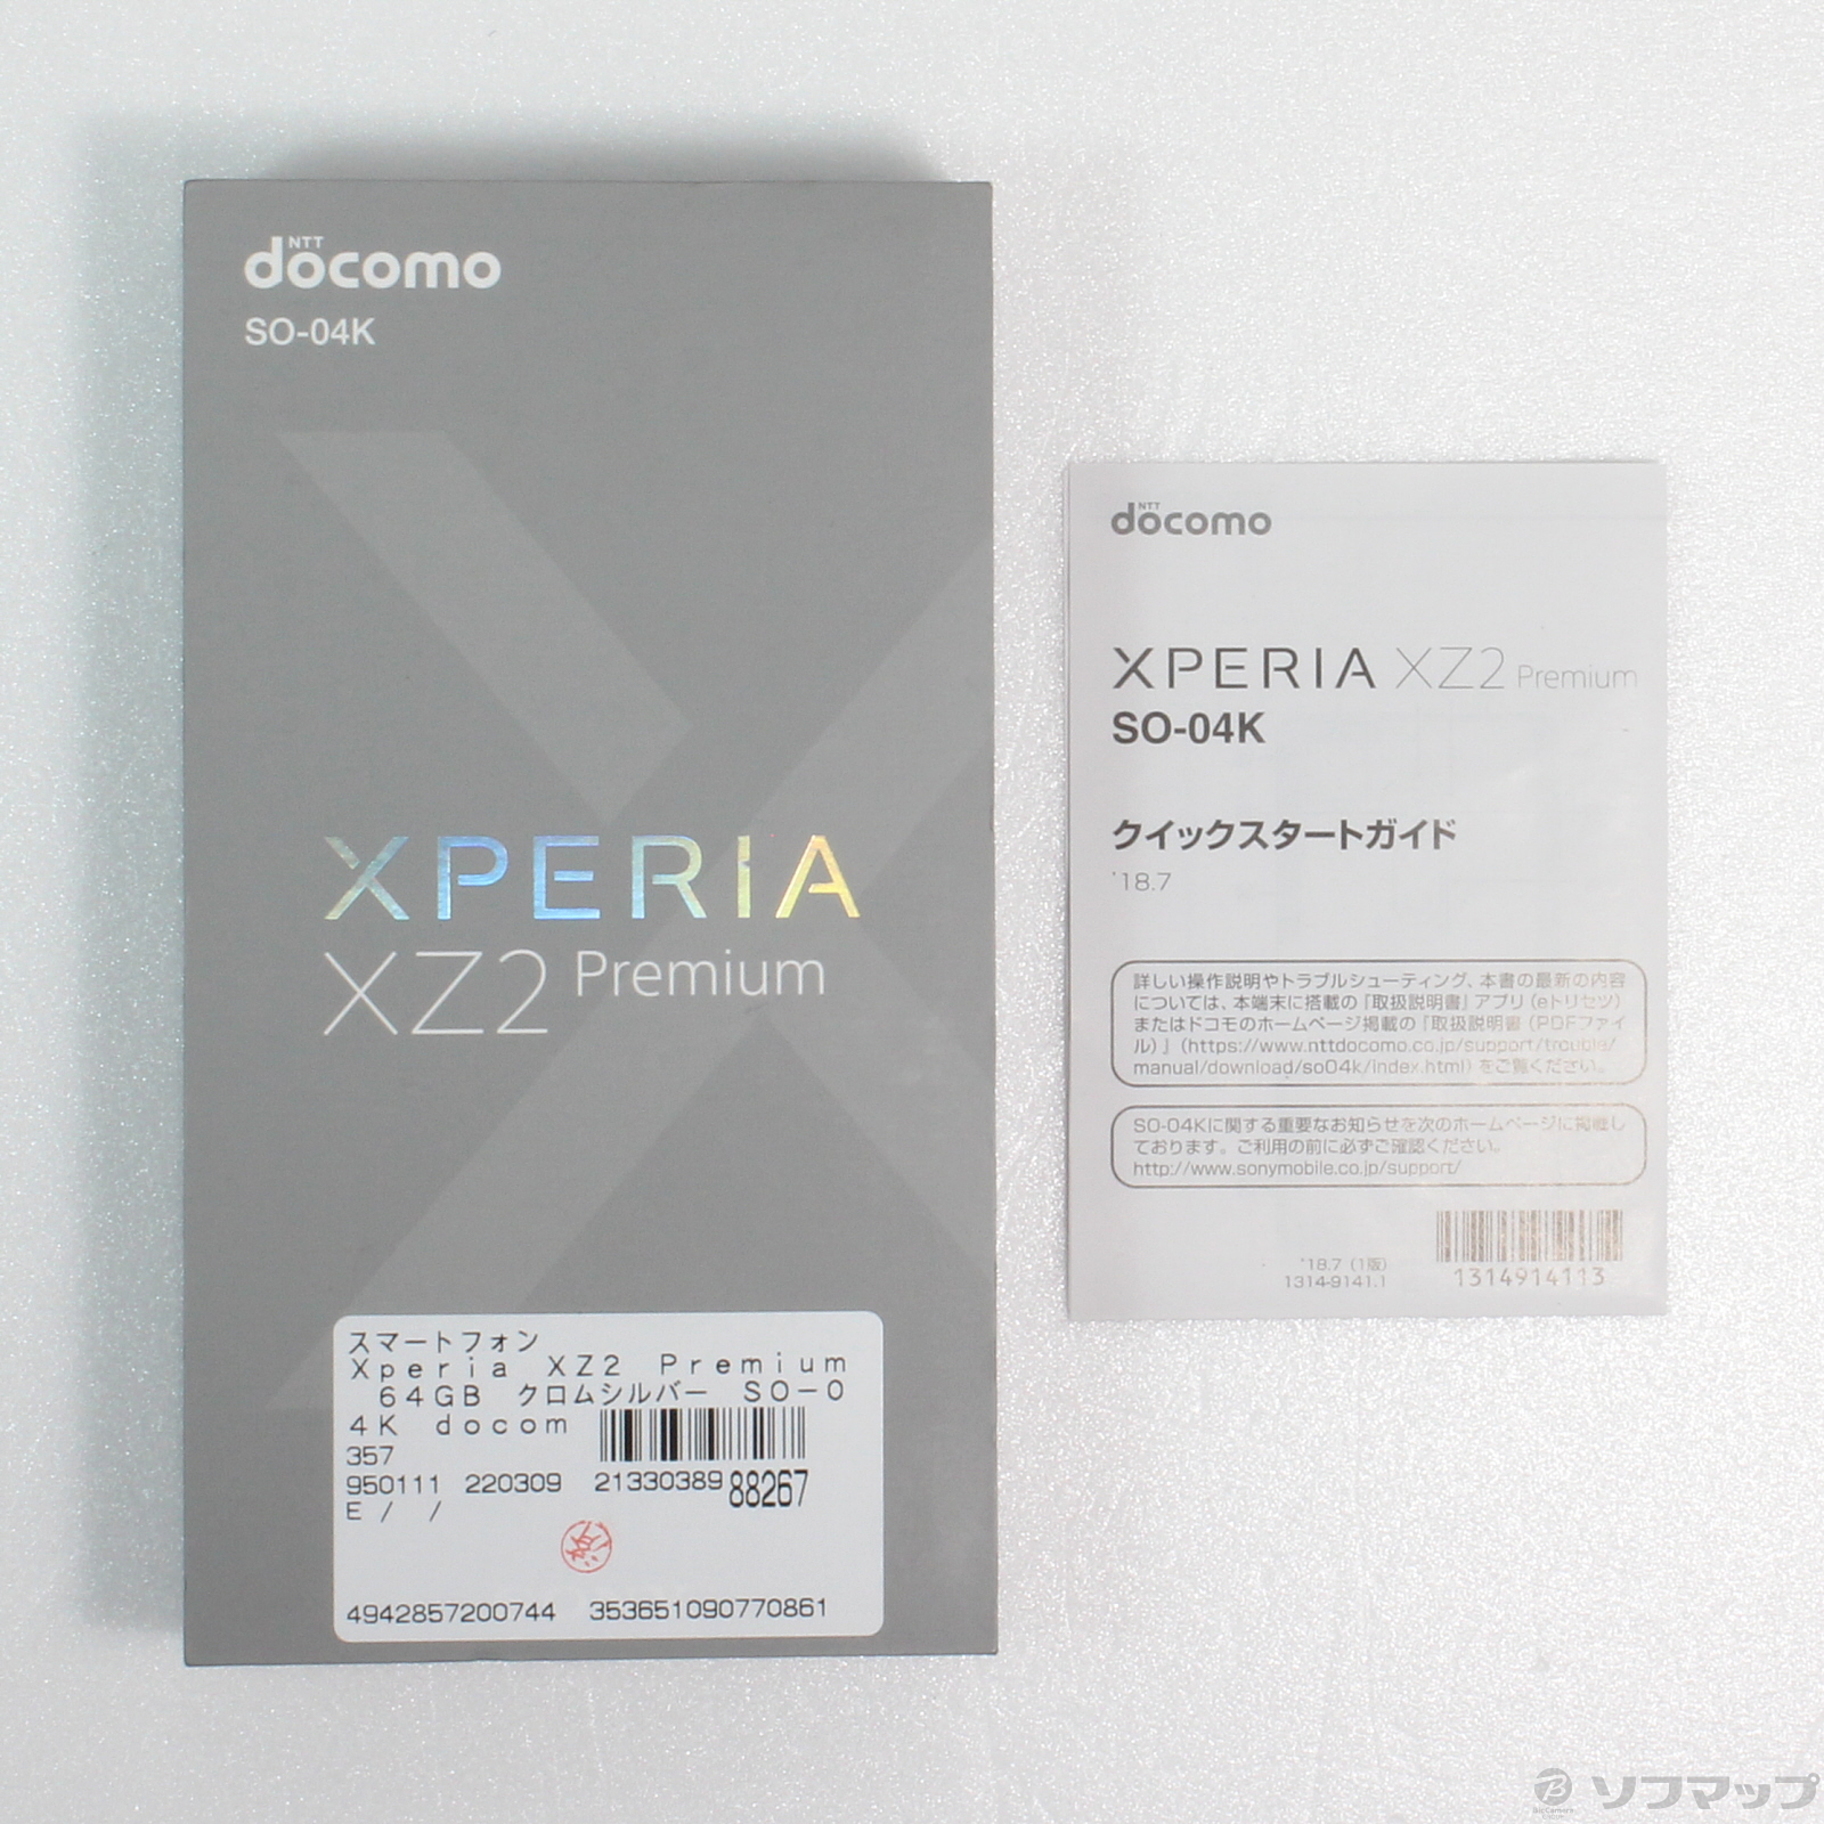 Xperia XZ2 Premium 64GB クロムシルバー SO-04K docomoロック解除SIMフリー